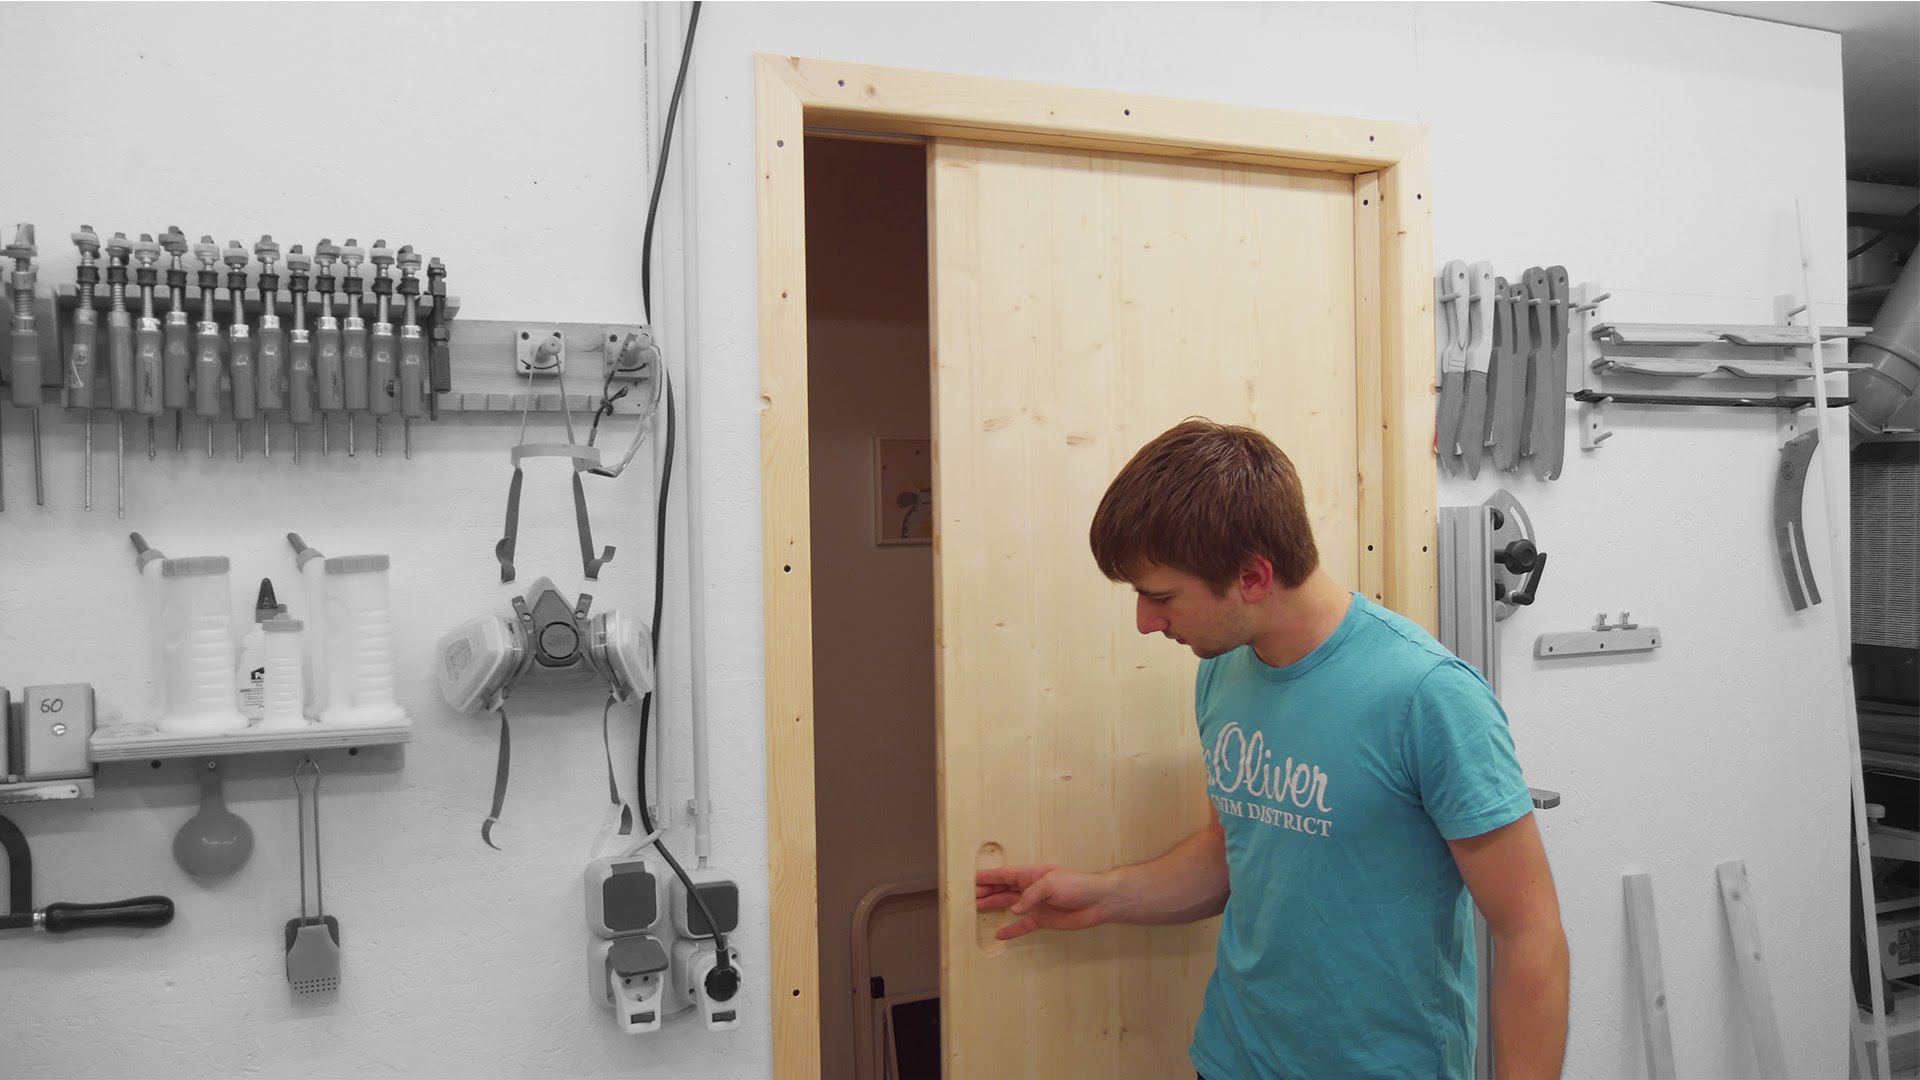 Installing a Sliding Door for the Workshop - YouTube